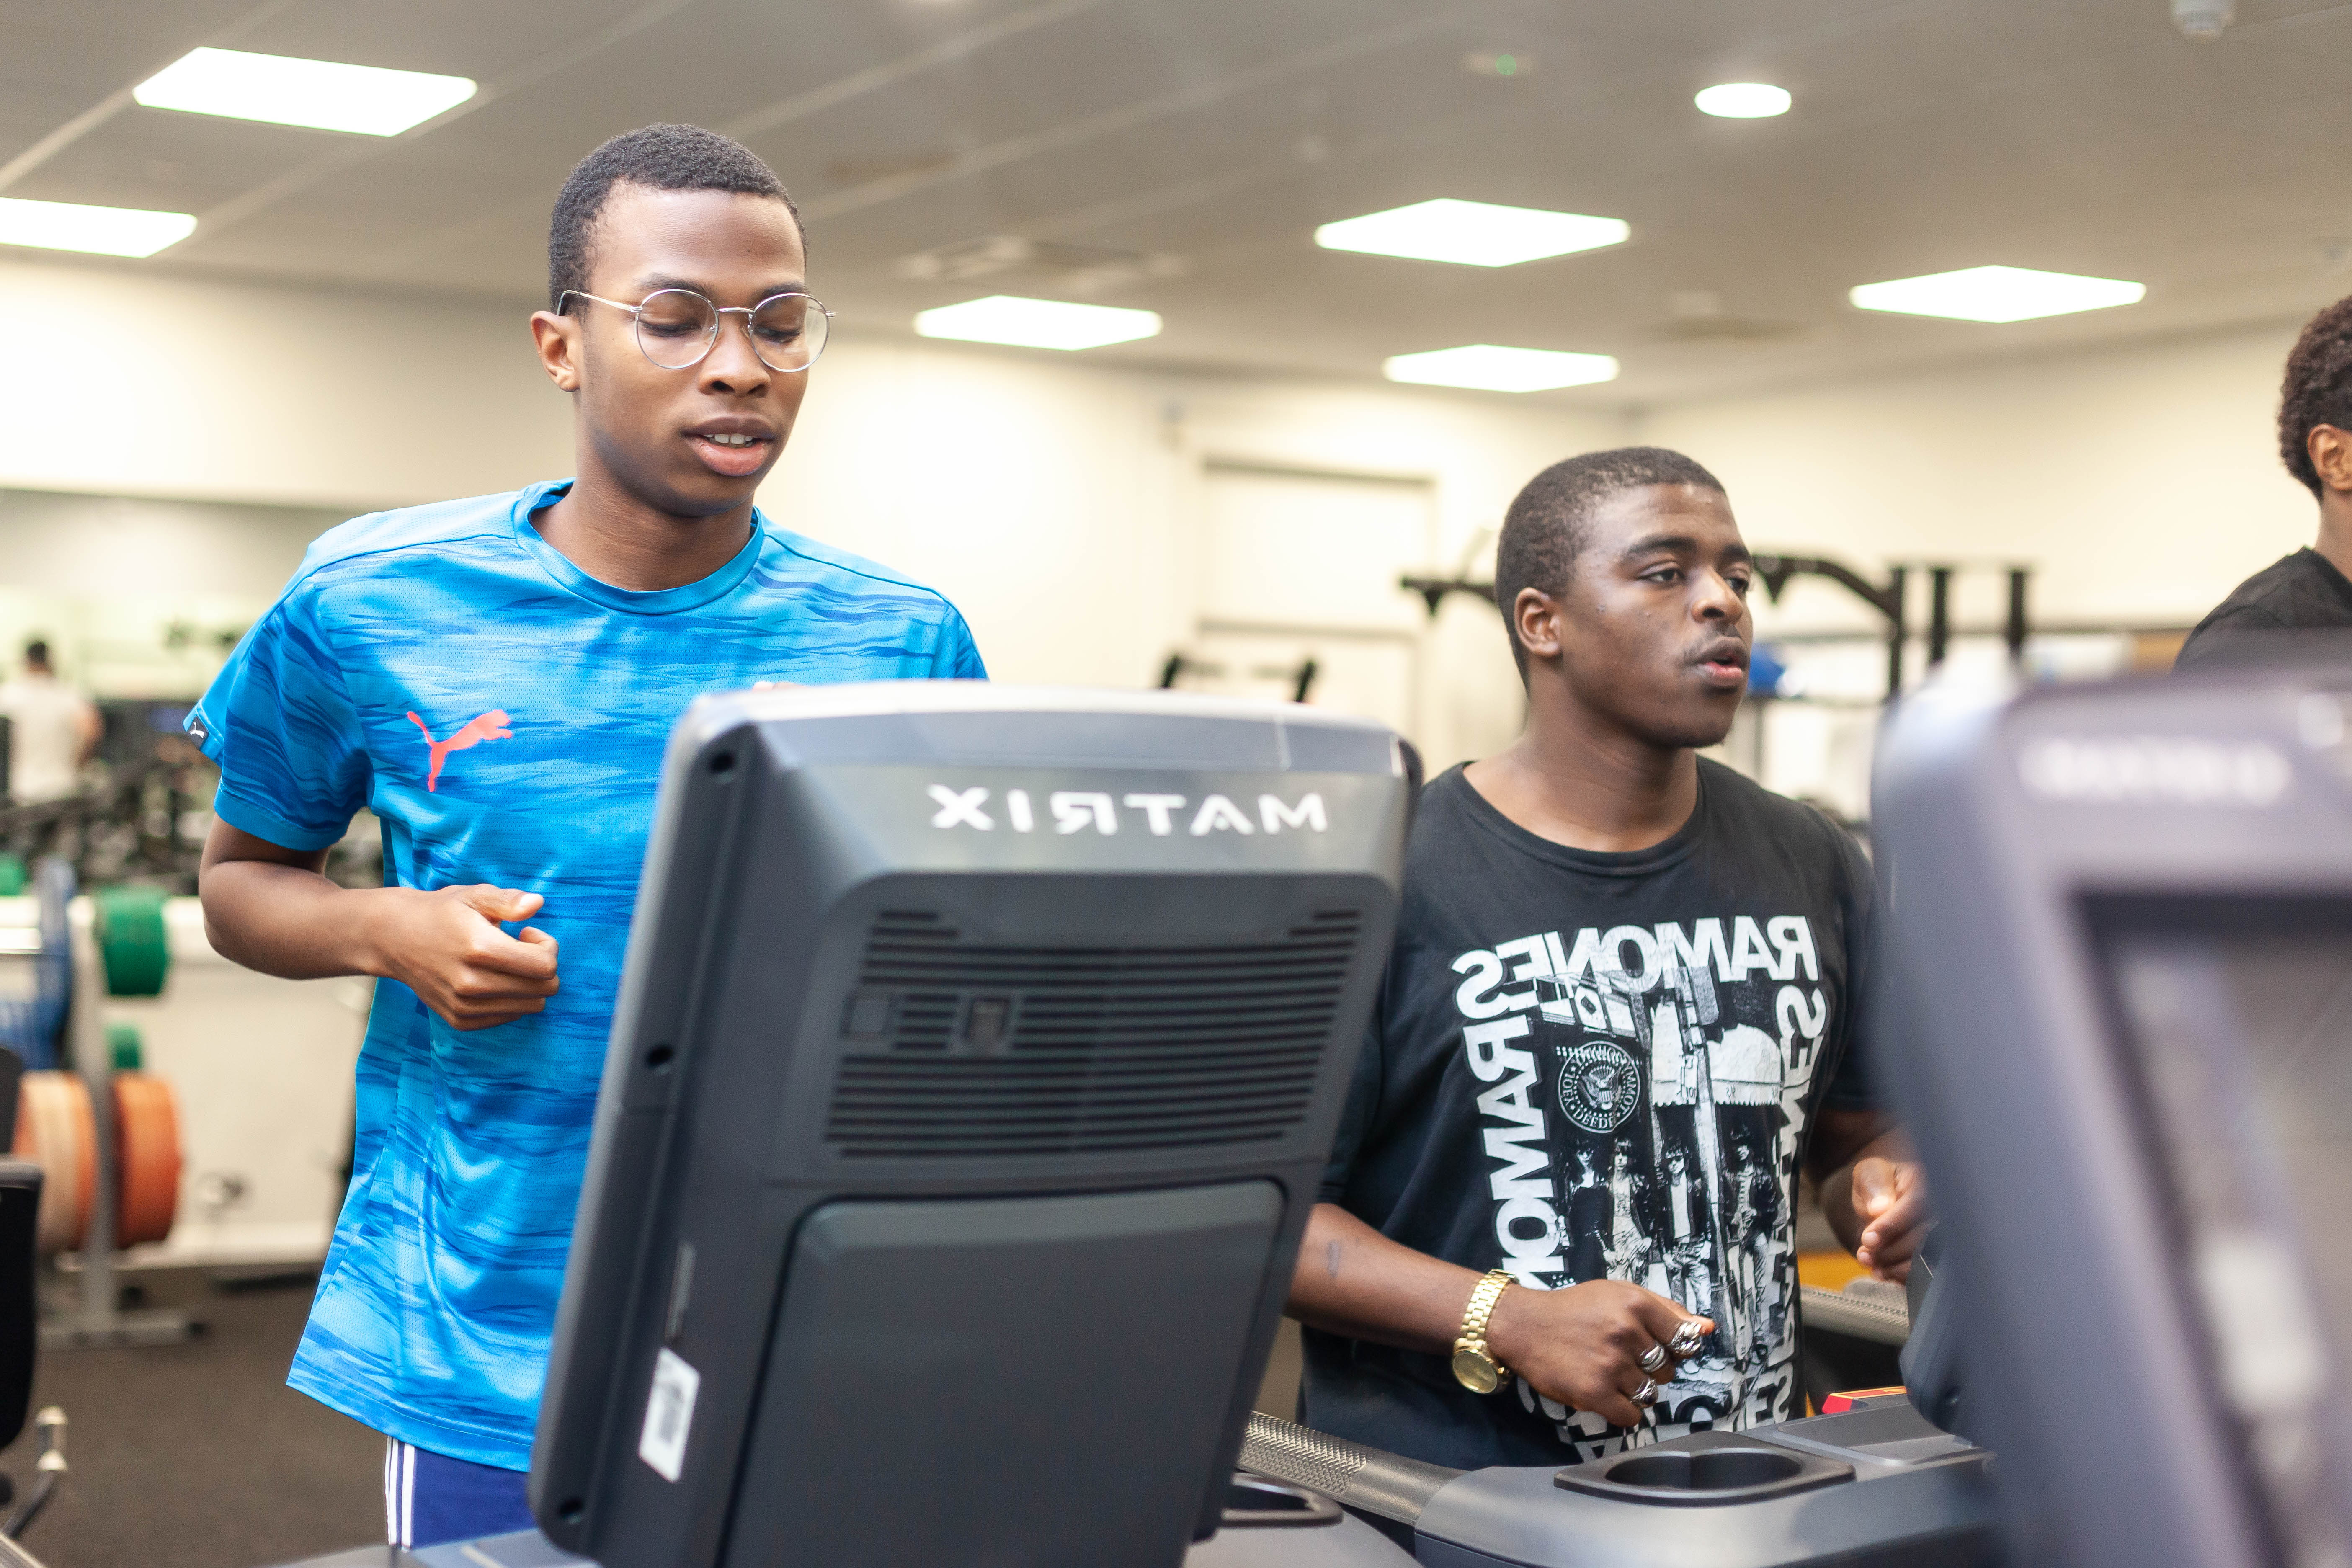 Student training on the treadmill 